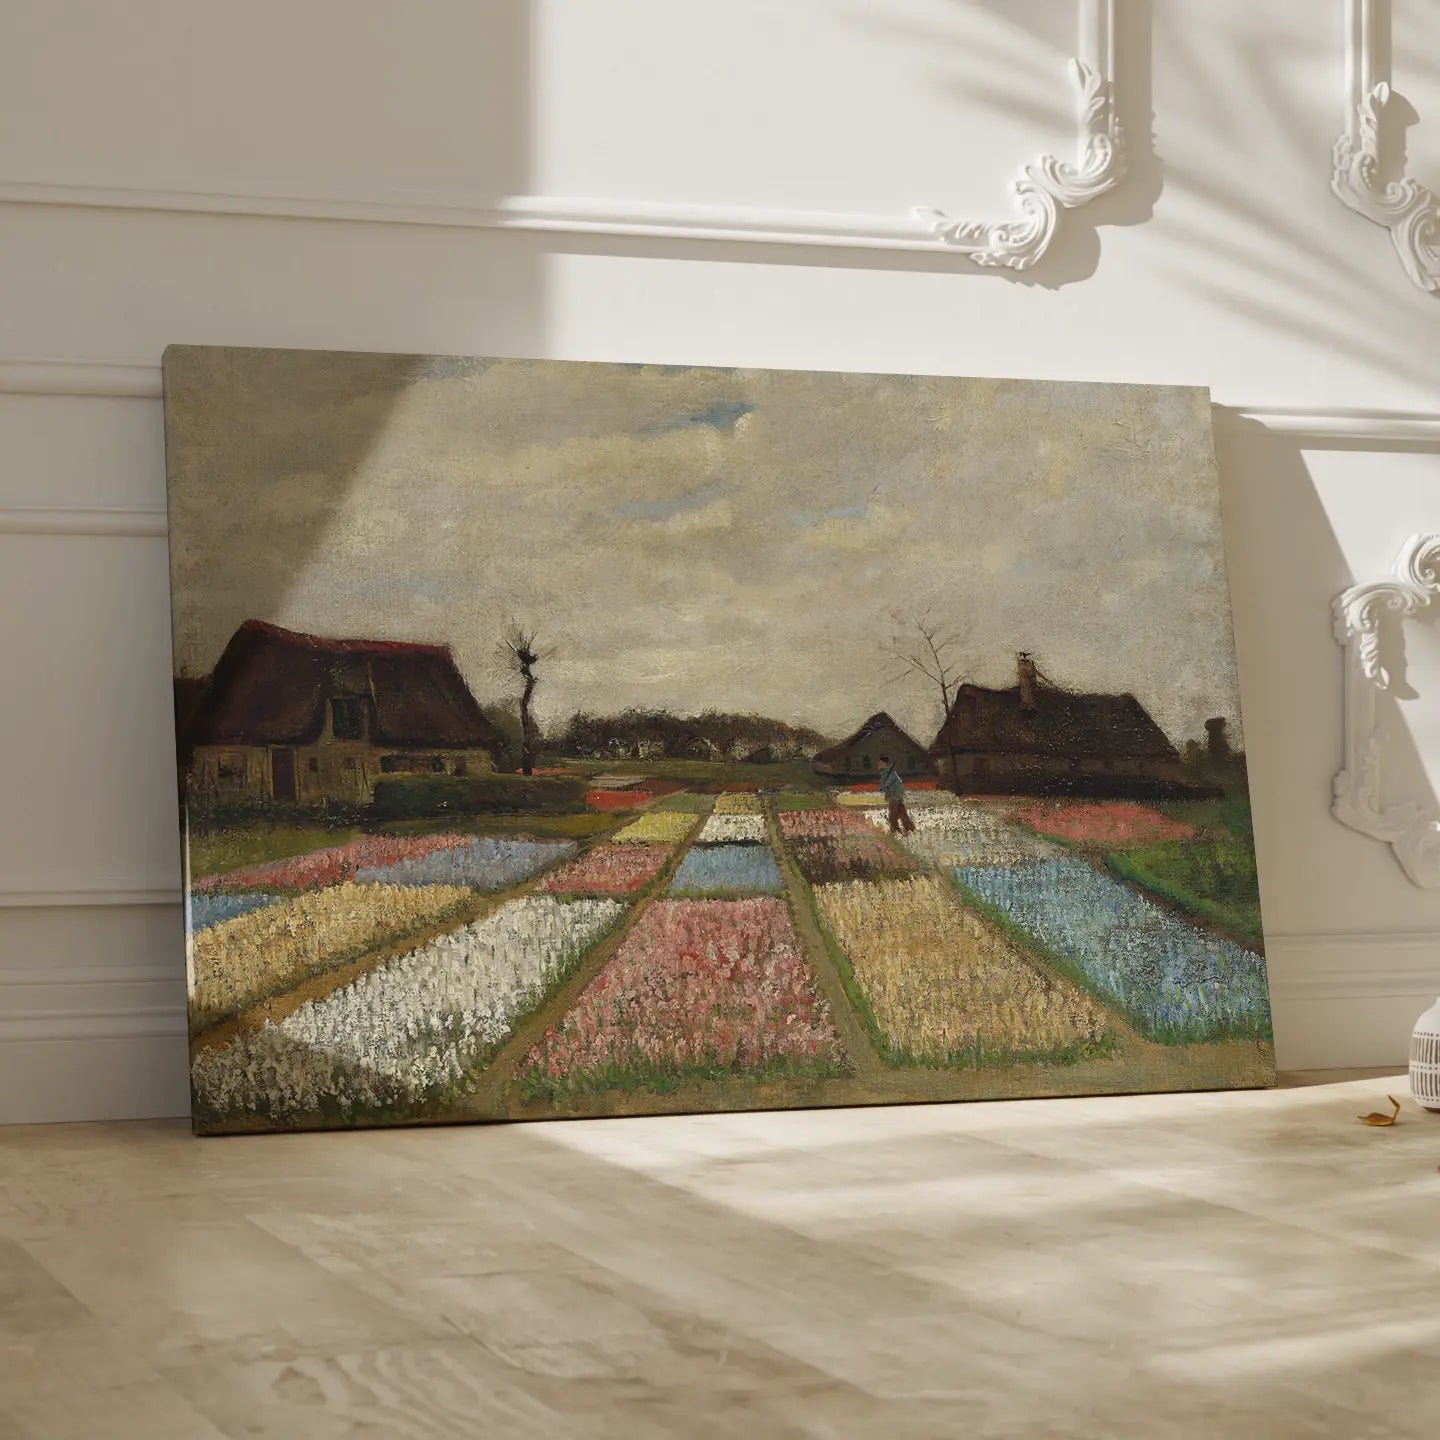 Flower Beds in Holland (c. 1883) Vincent van Gogh